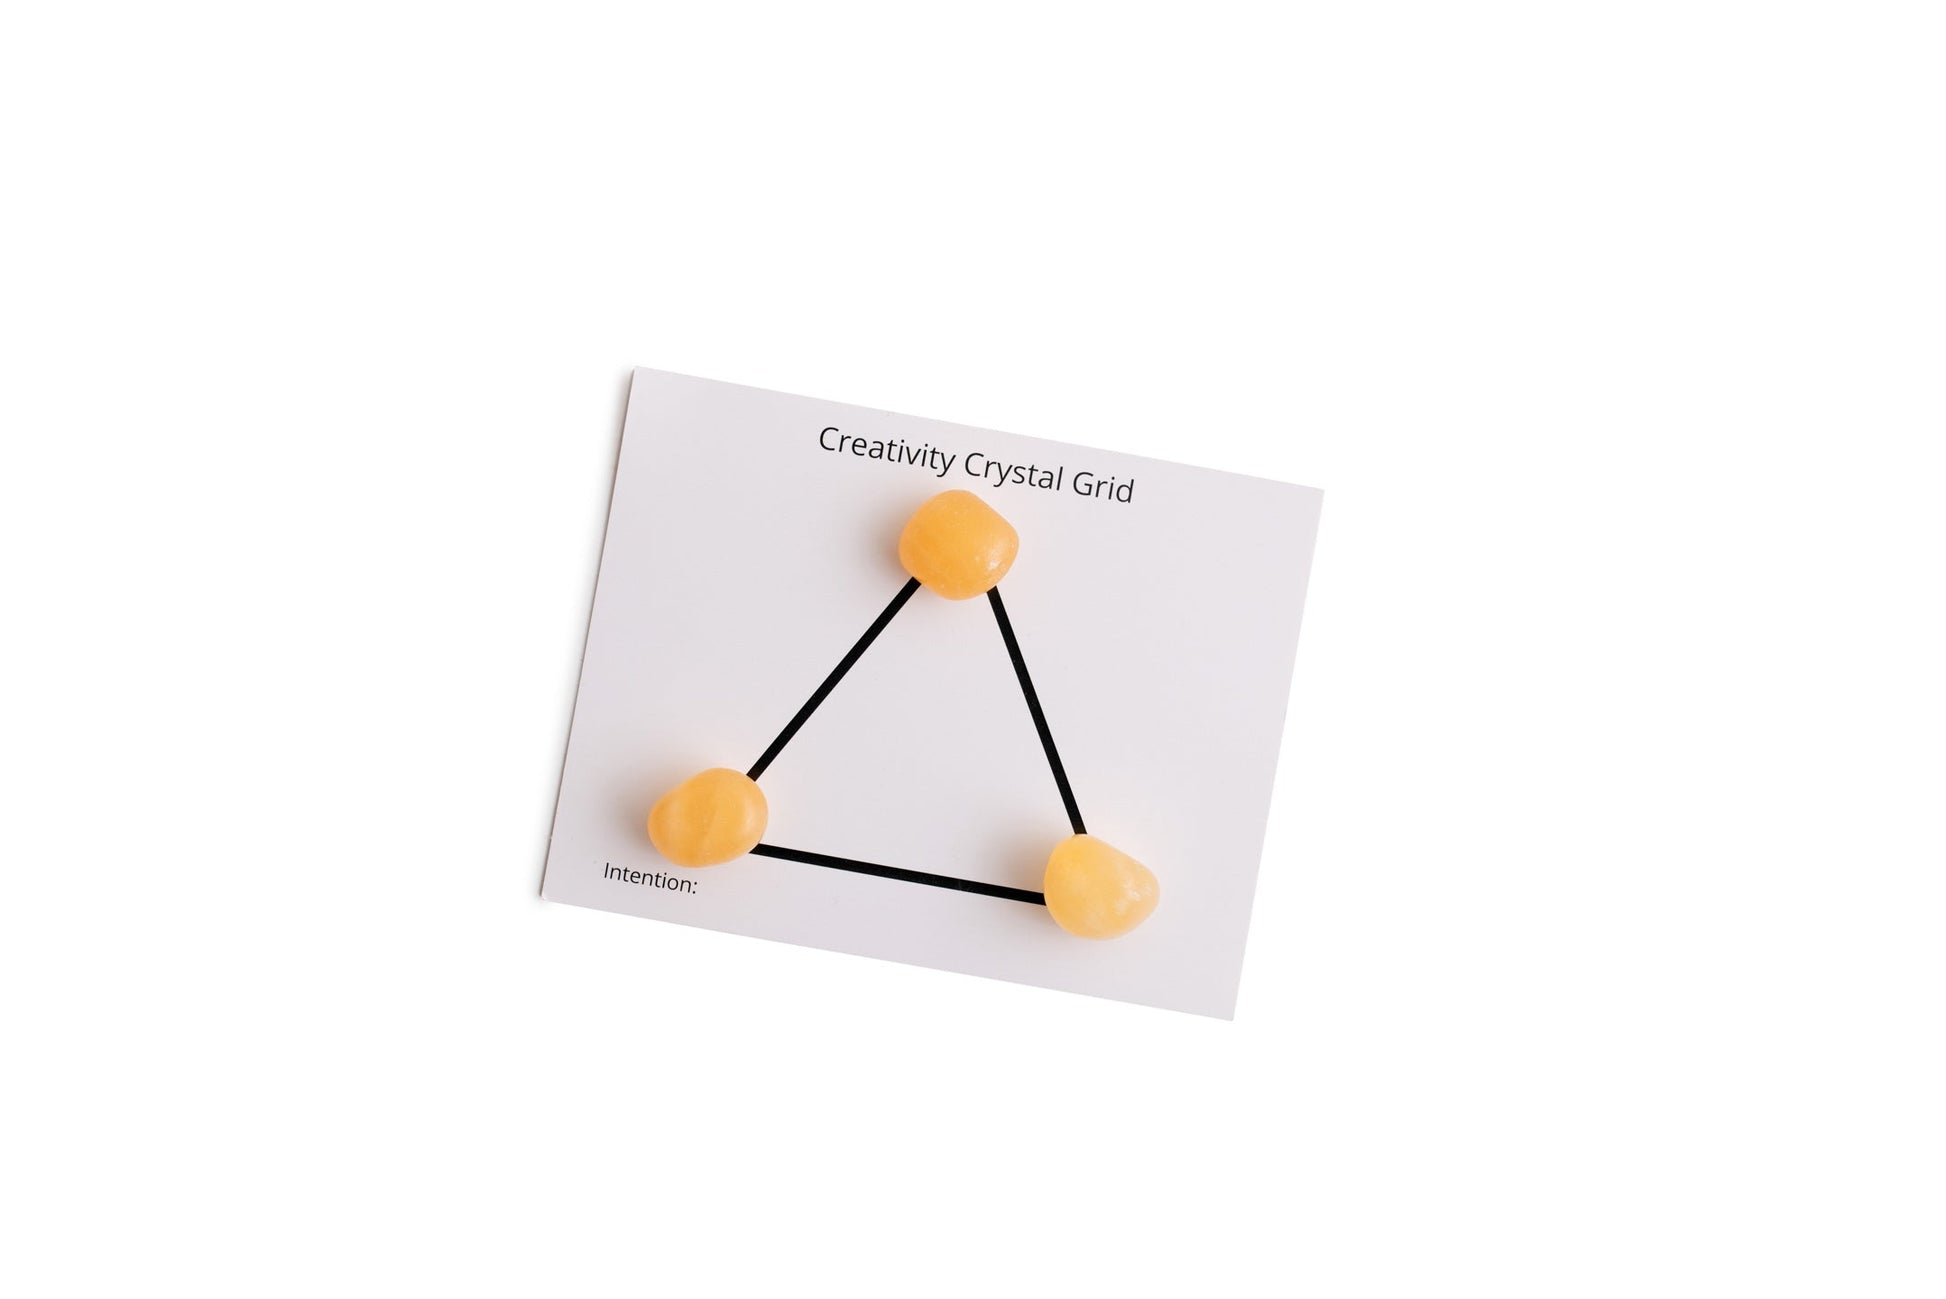 Creativity Crystal Grid with Orange Calcite Stones